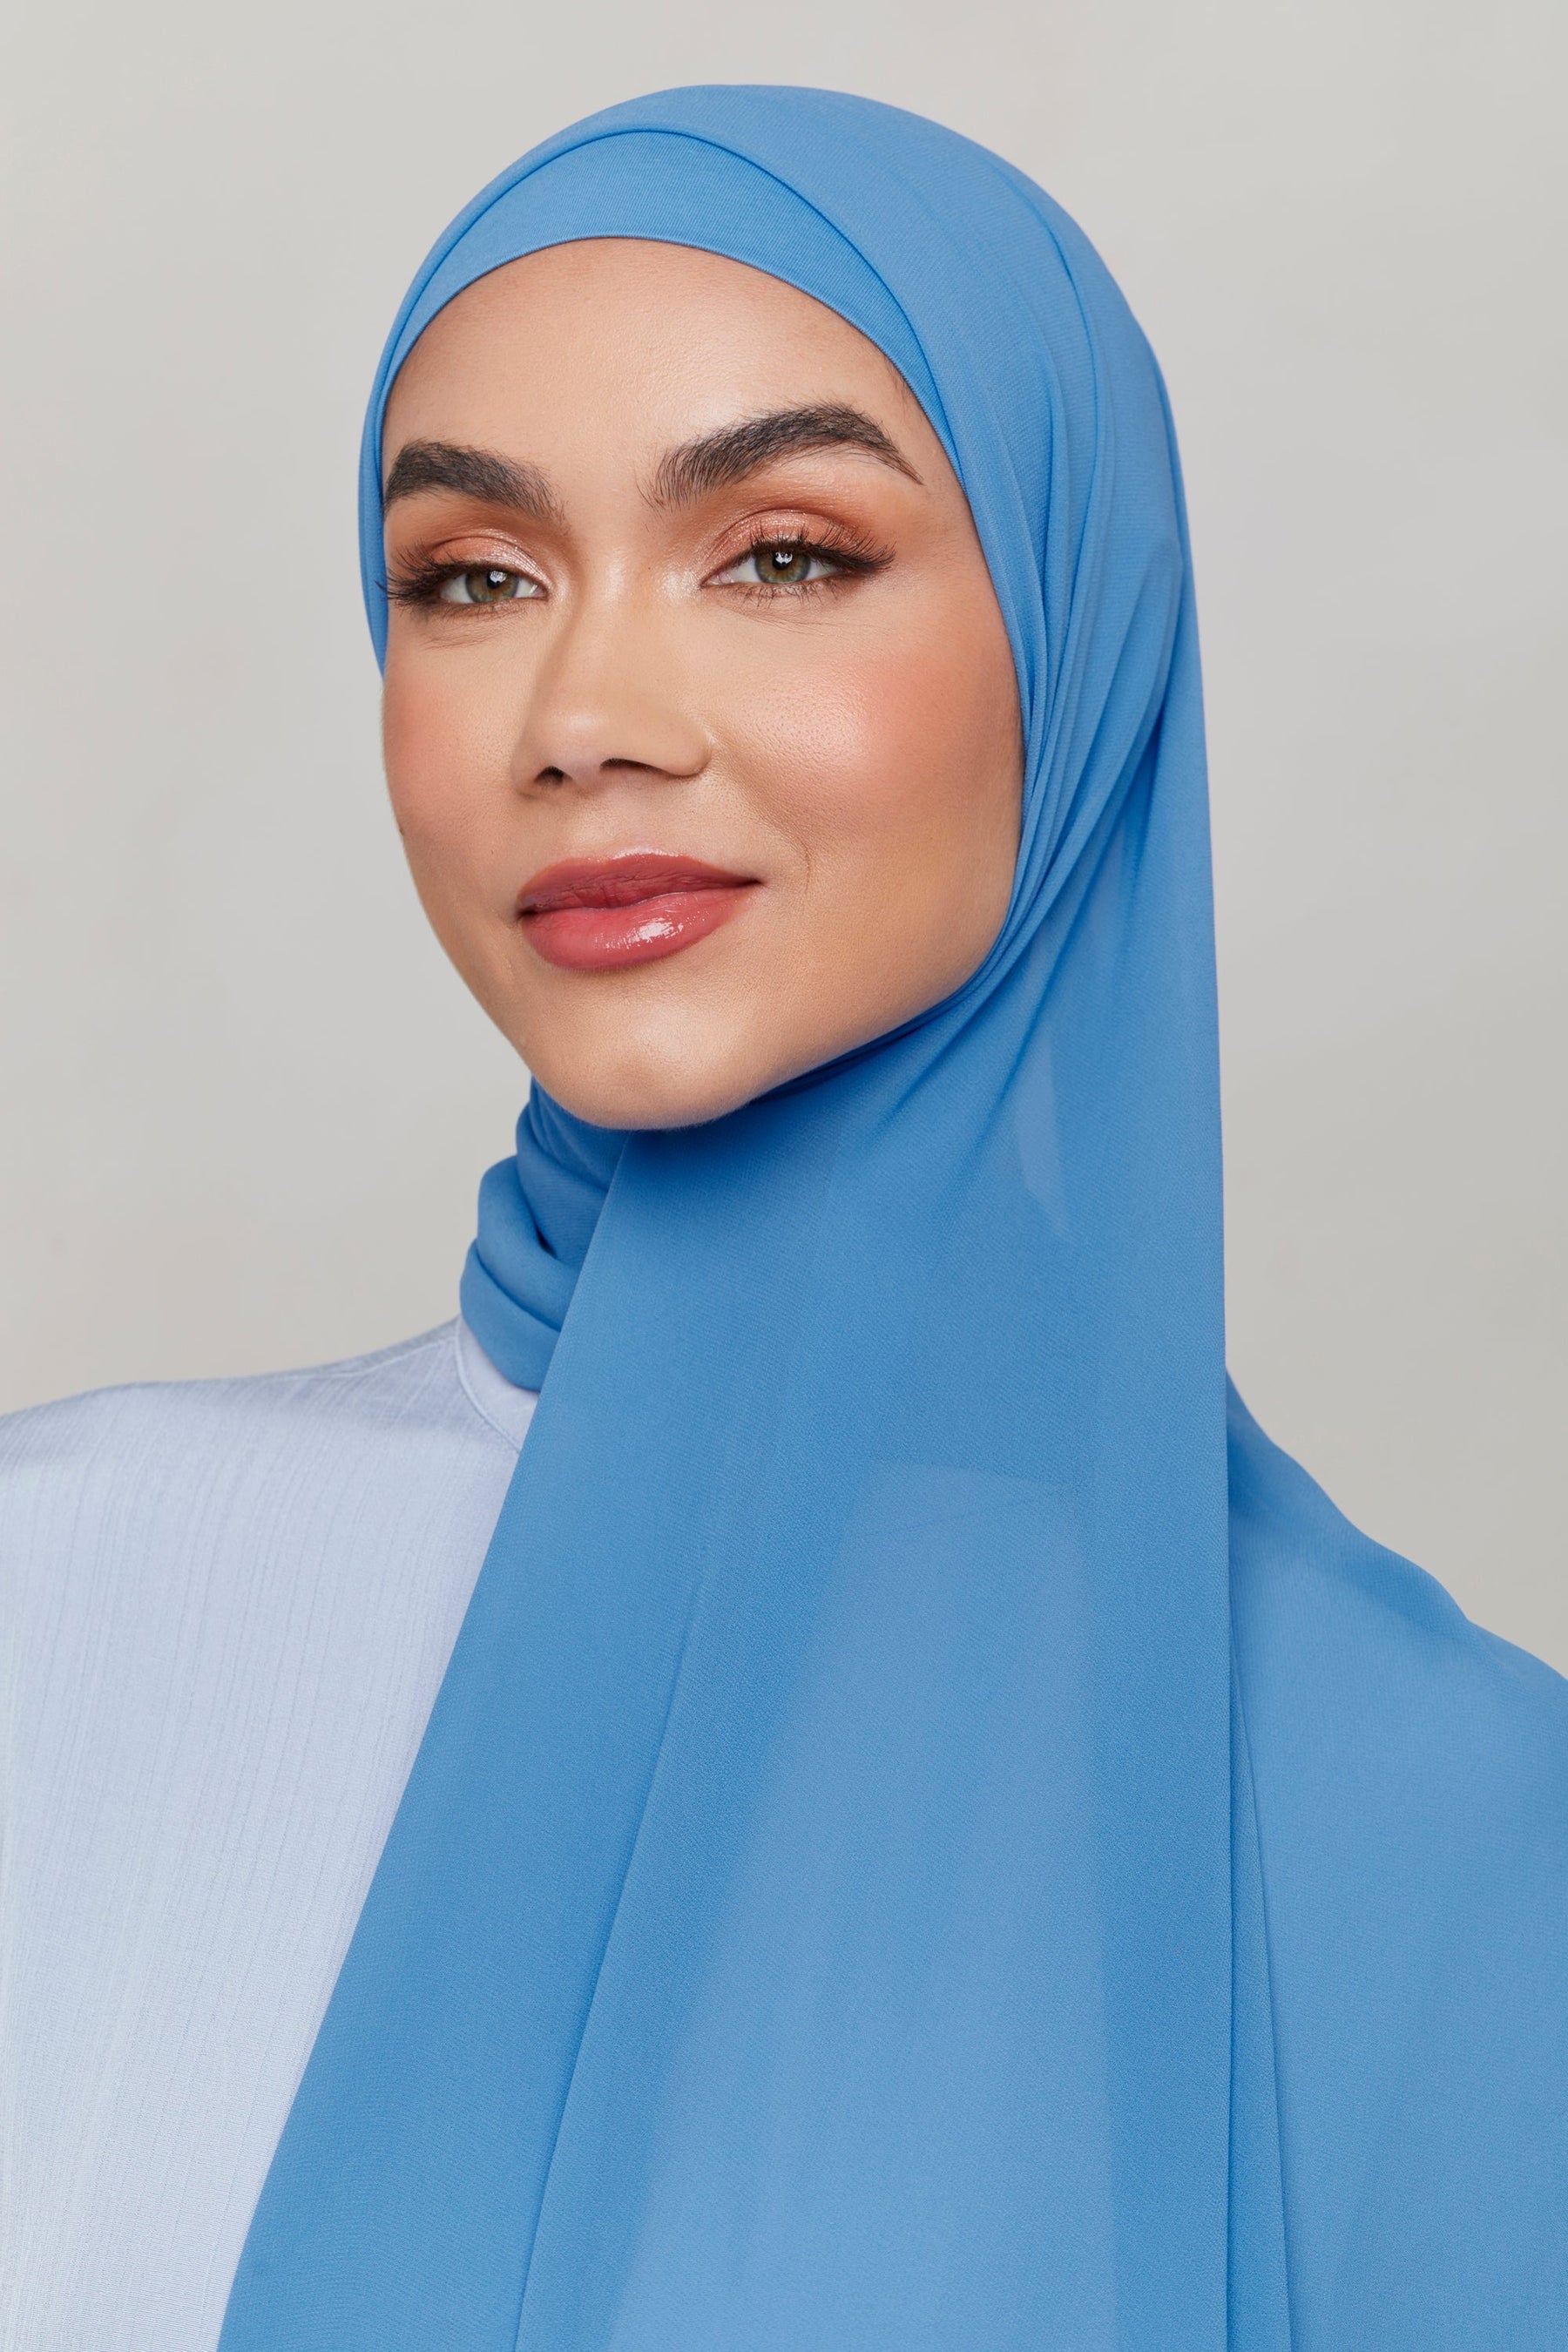 Chiffon LITE Hijab - Azure Blue Veiled 